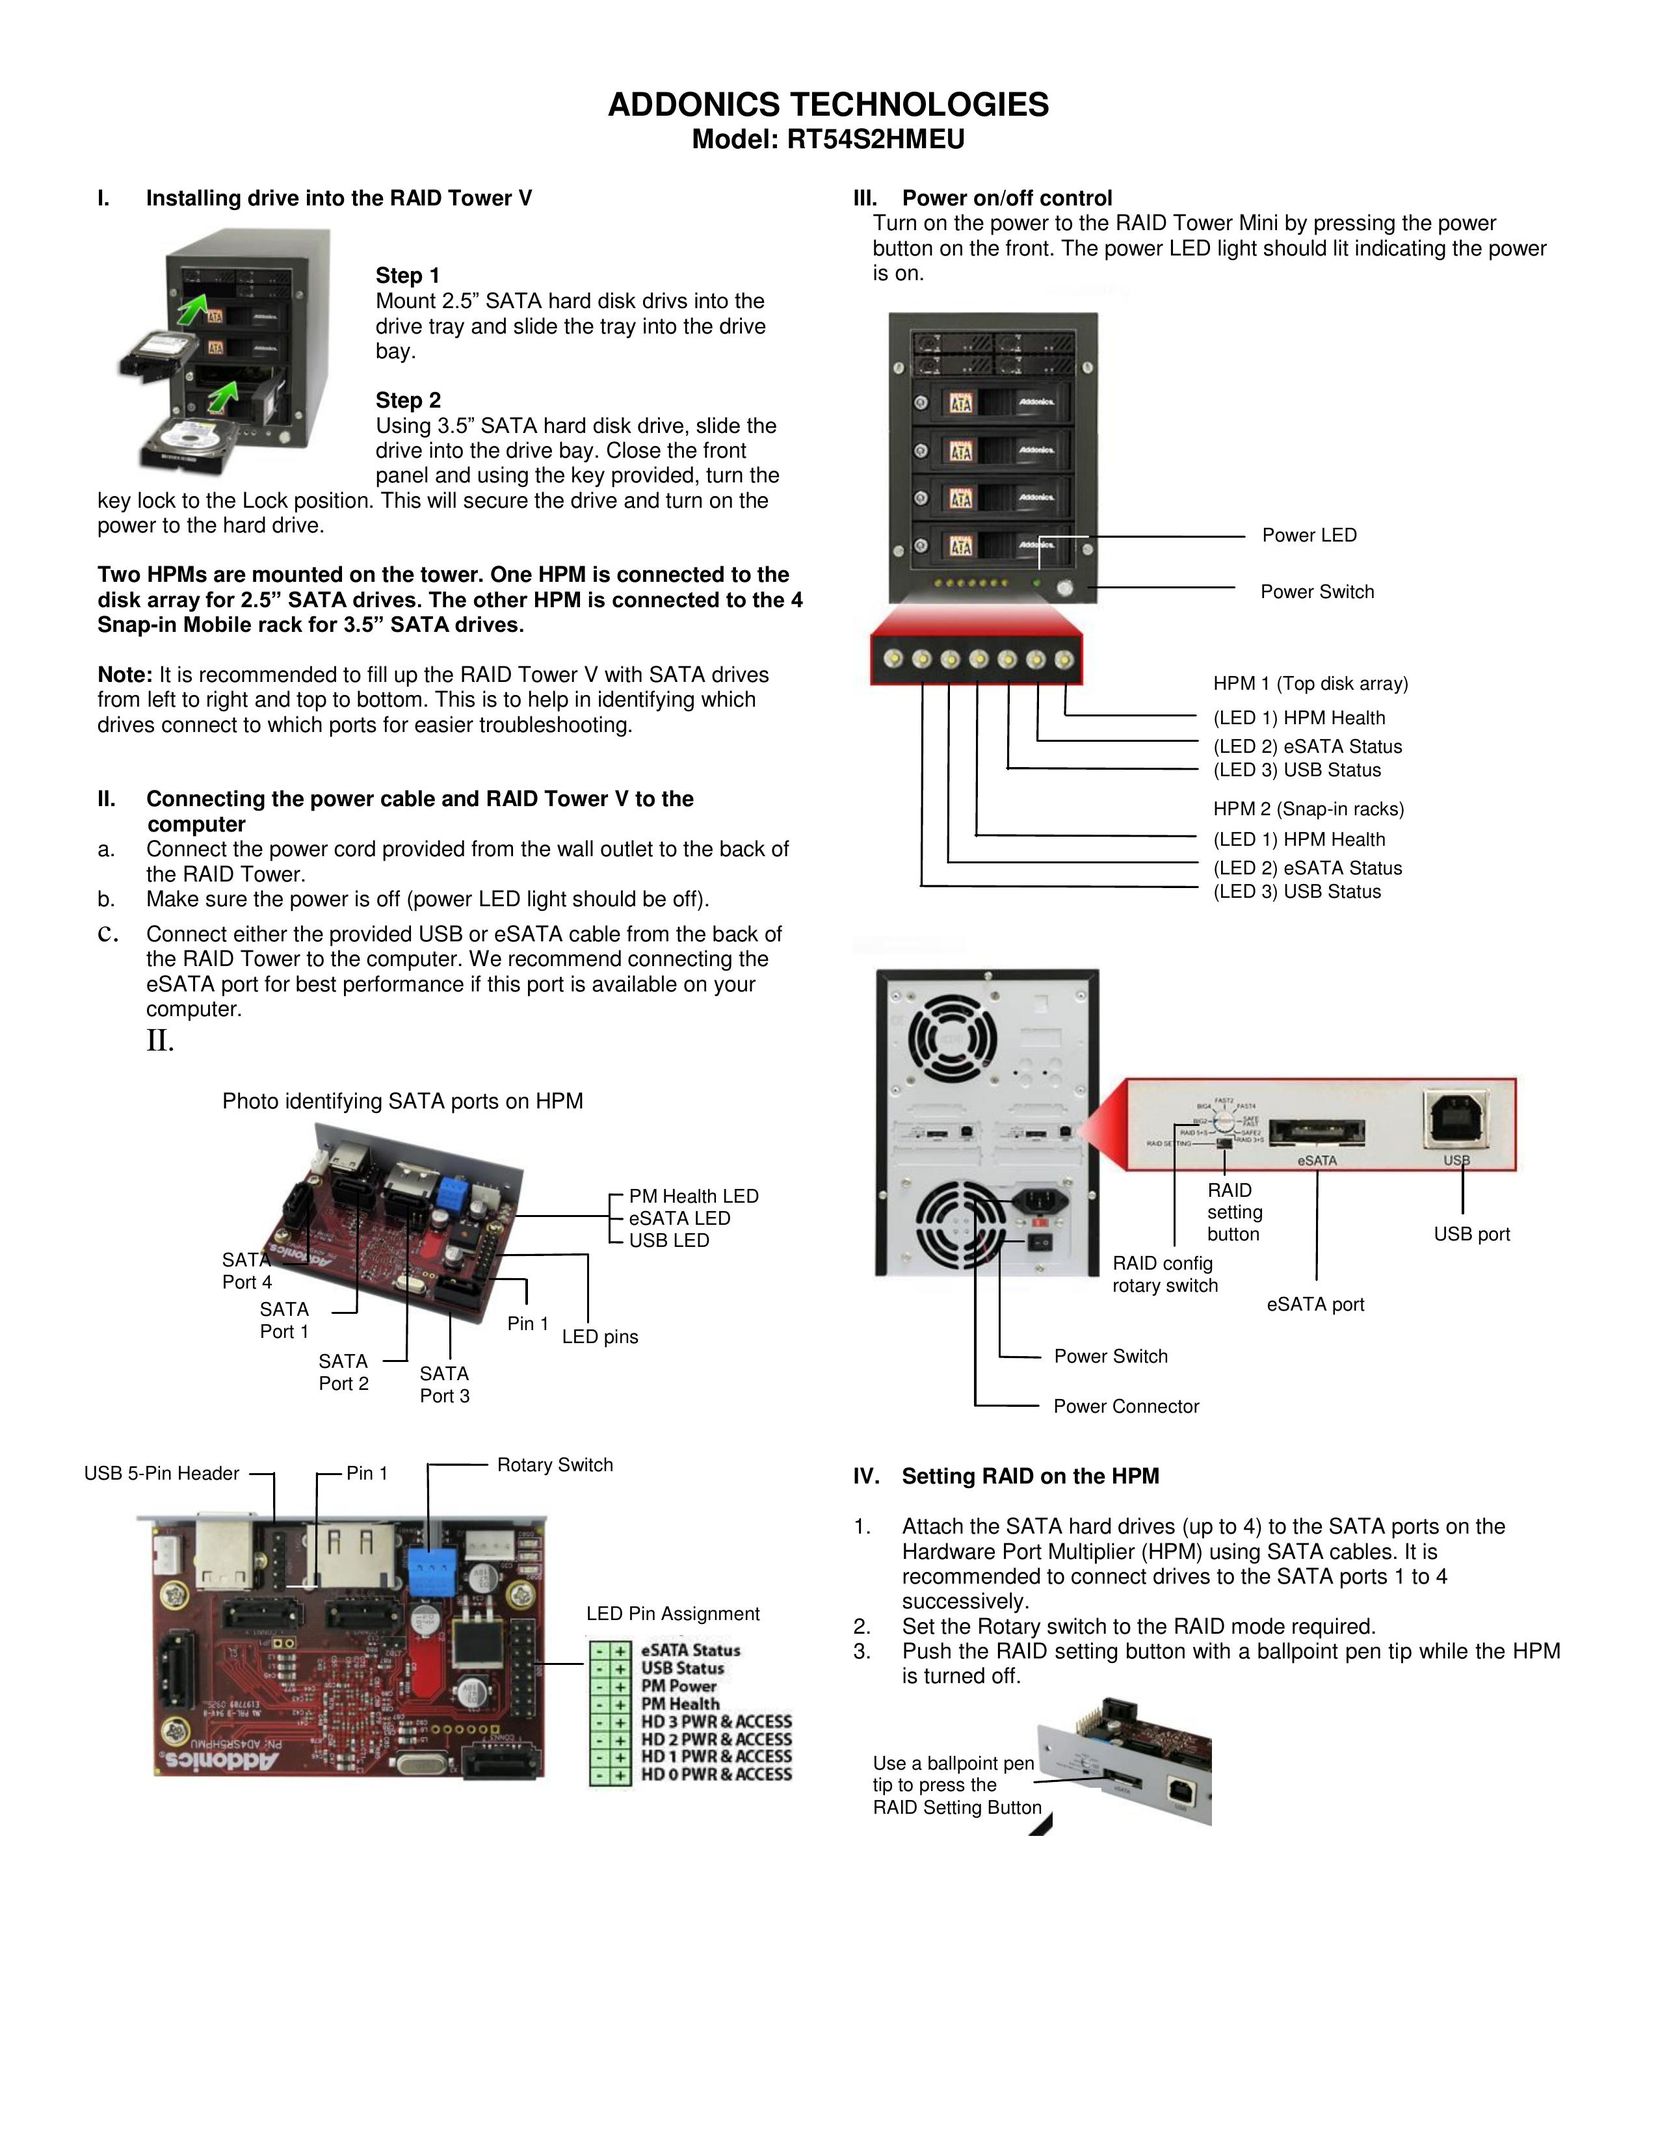 Addonics Technologies RT54S2HMEU Computer Hardware User Manual